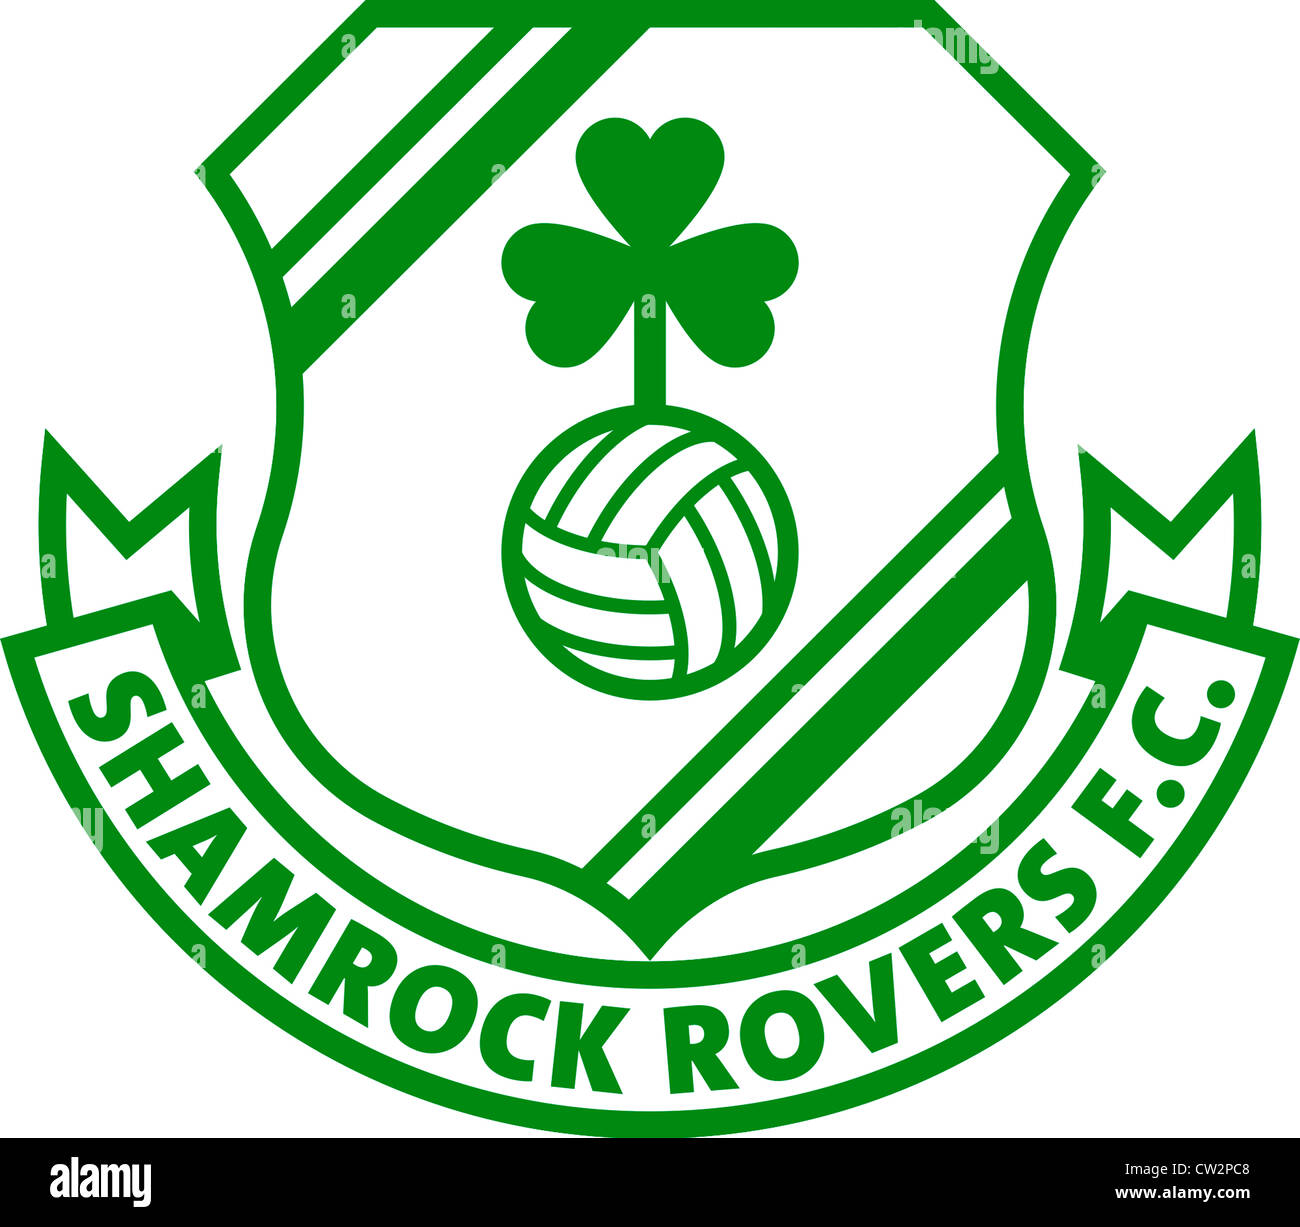 Logo of Irish football team Shamrock Rovers Football Club. Stock Photo